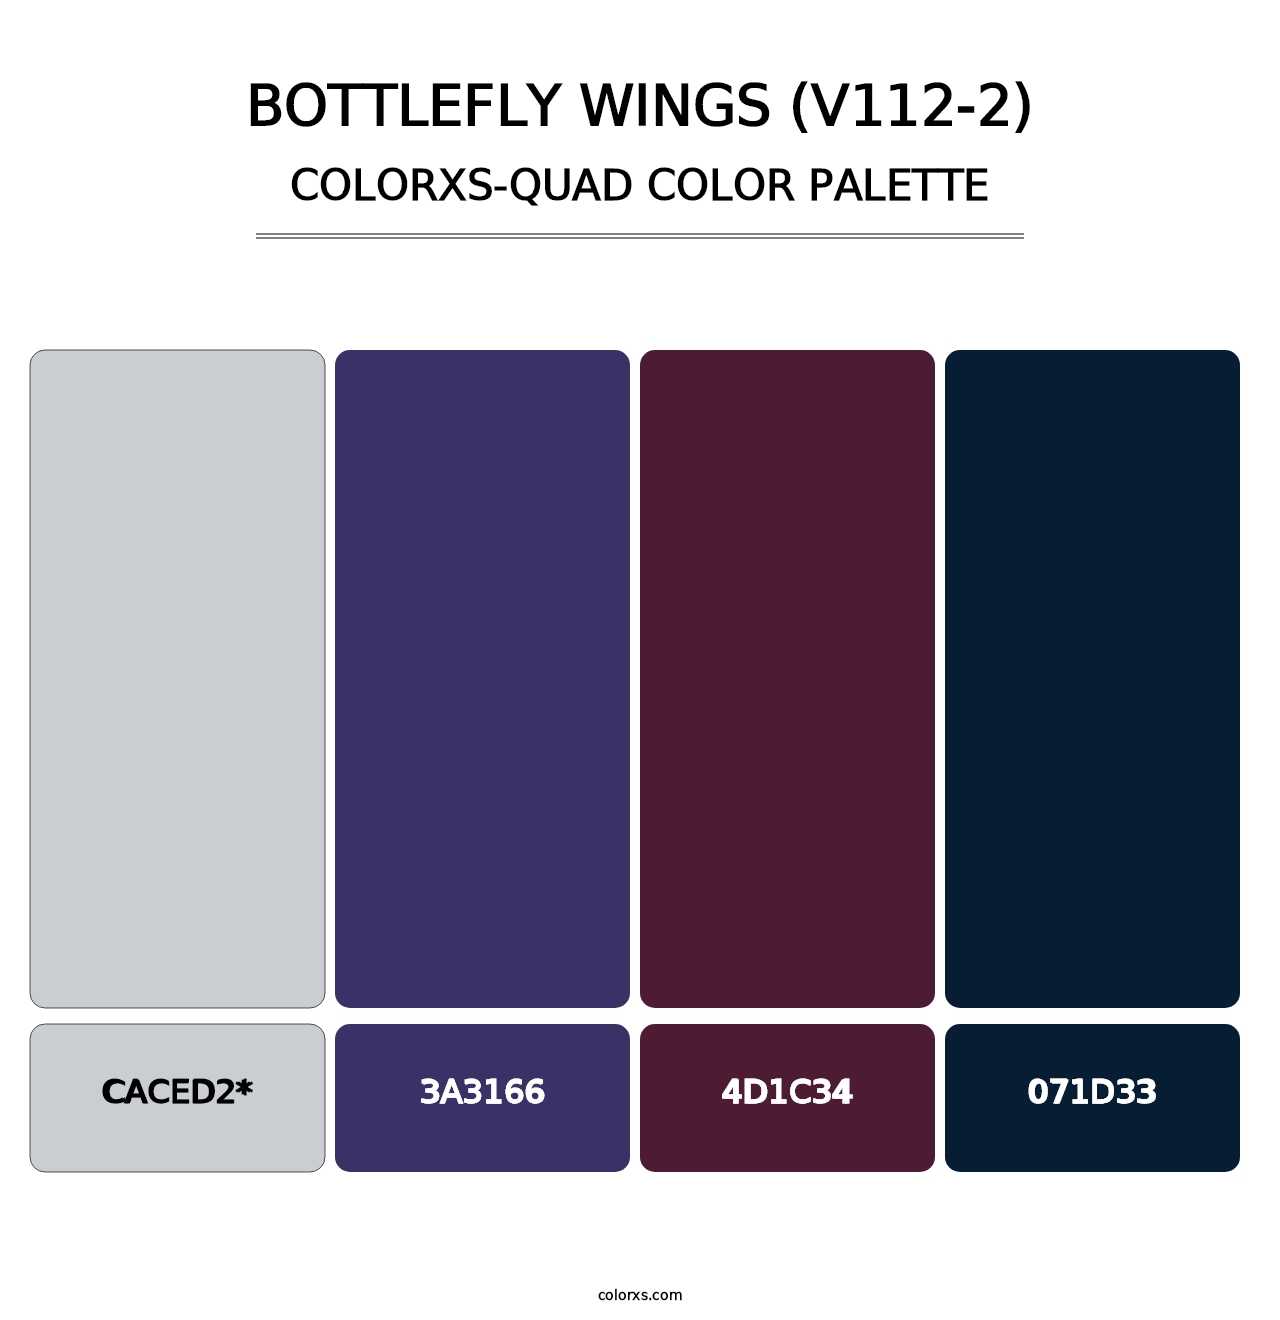 Bottlefly Wings (V112-2) - Colorxs Quad Palette